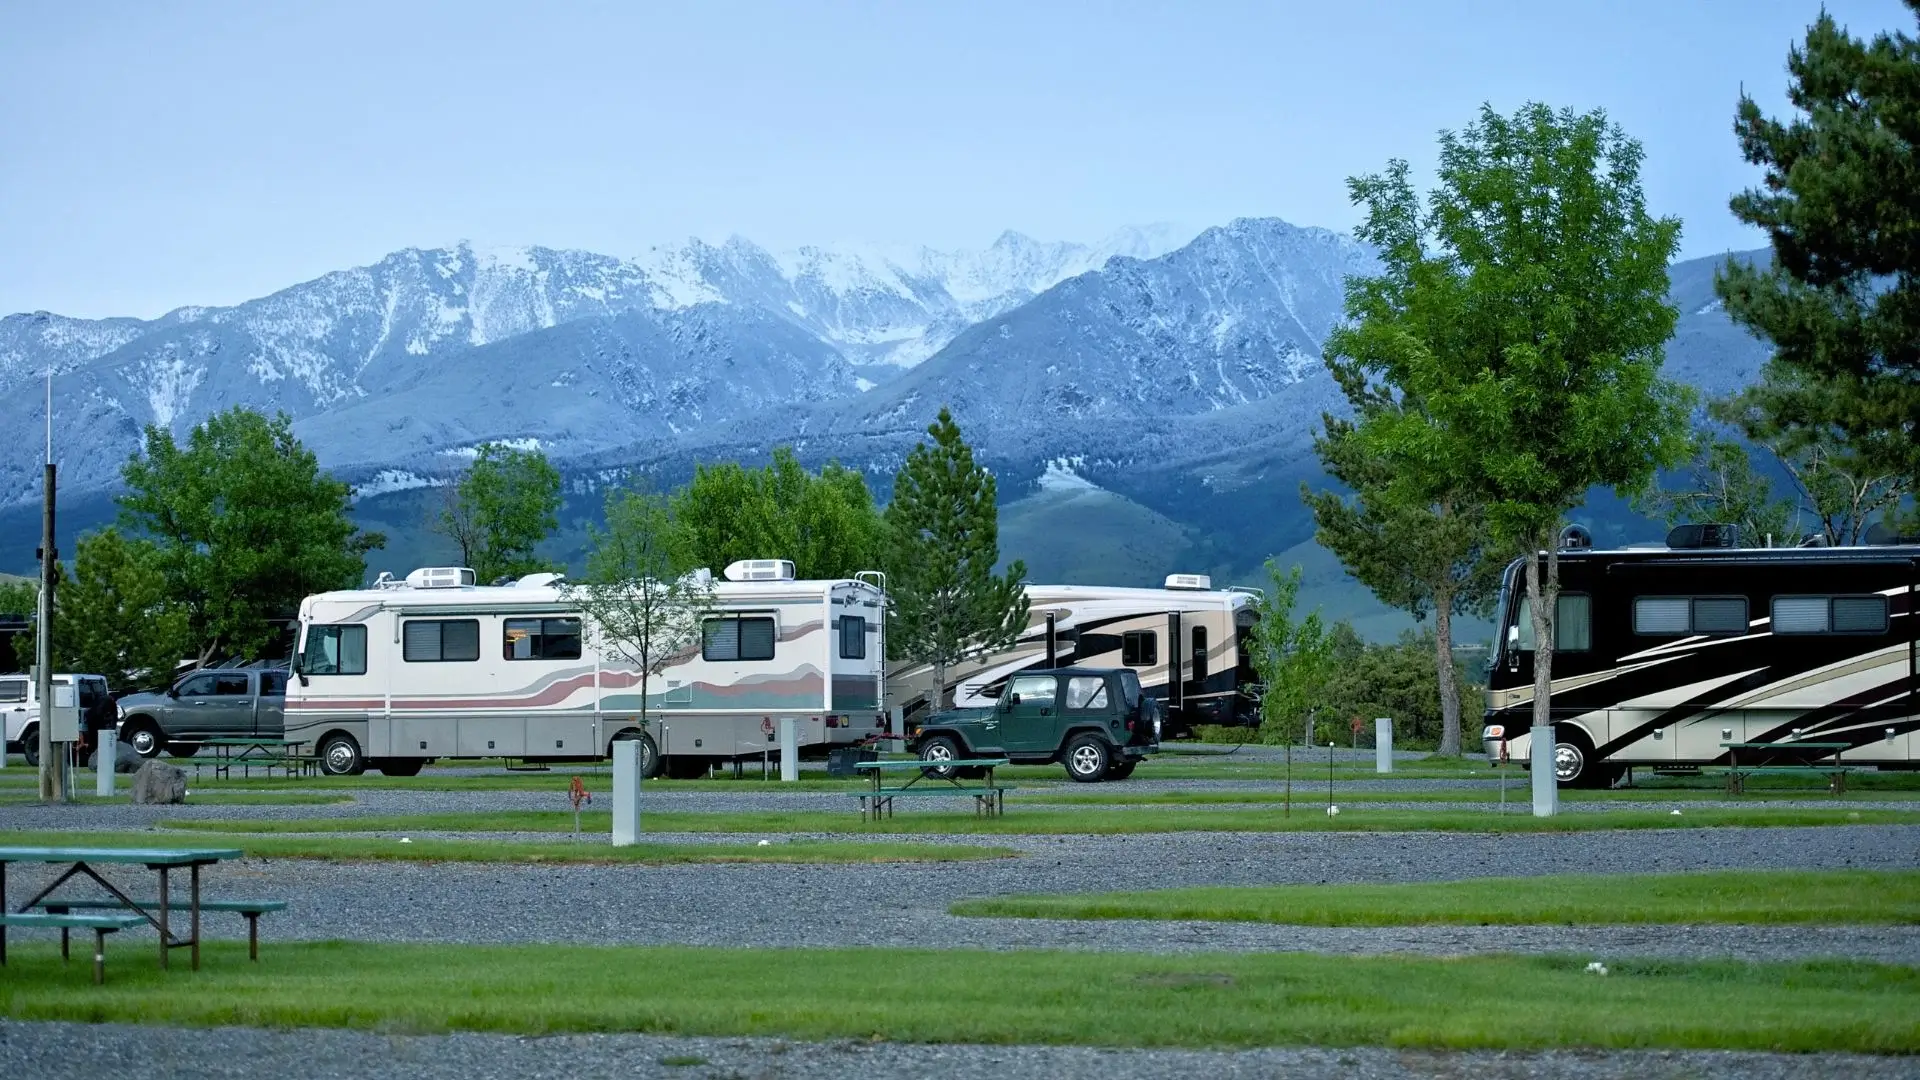 RVs at a campsite